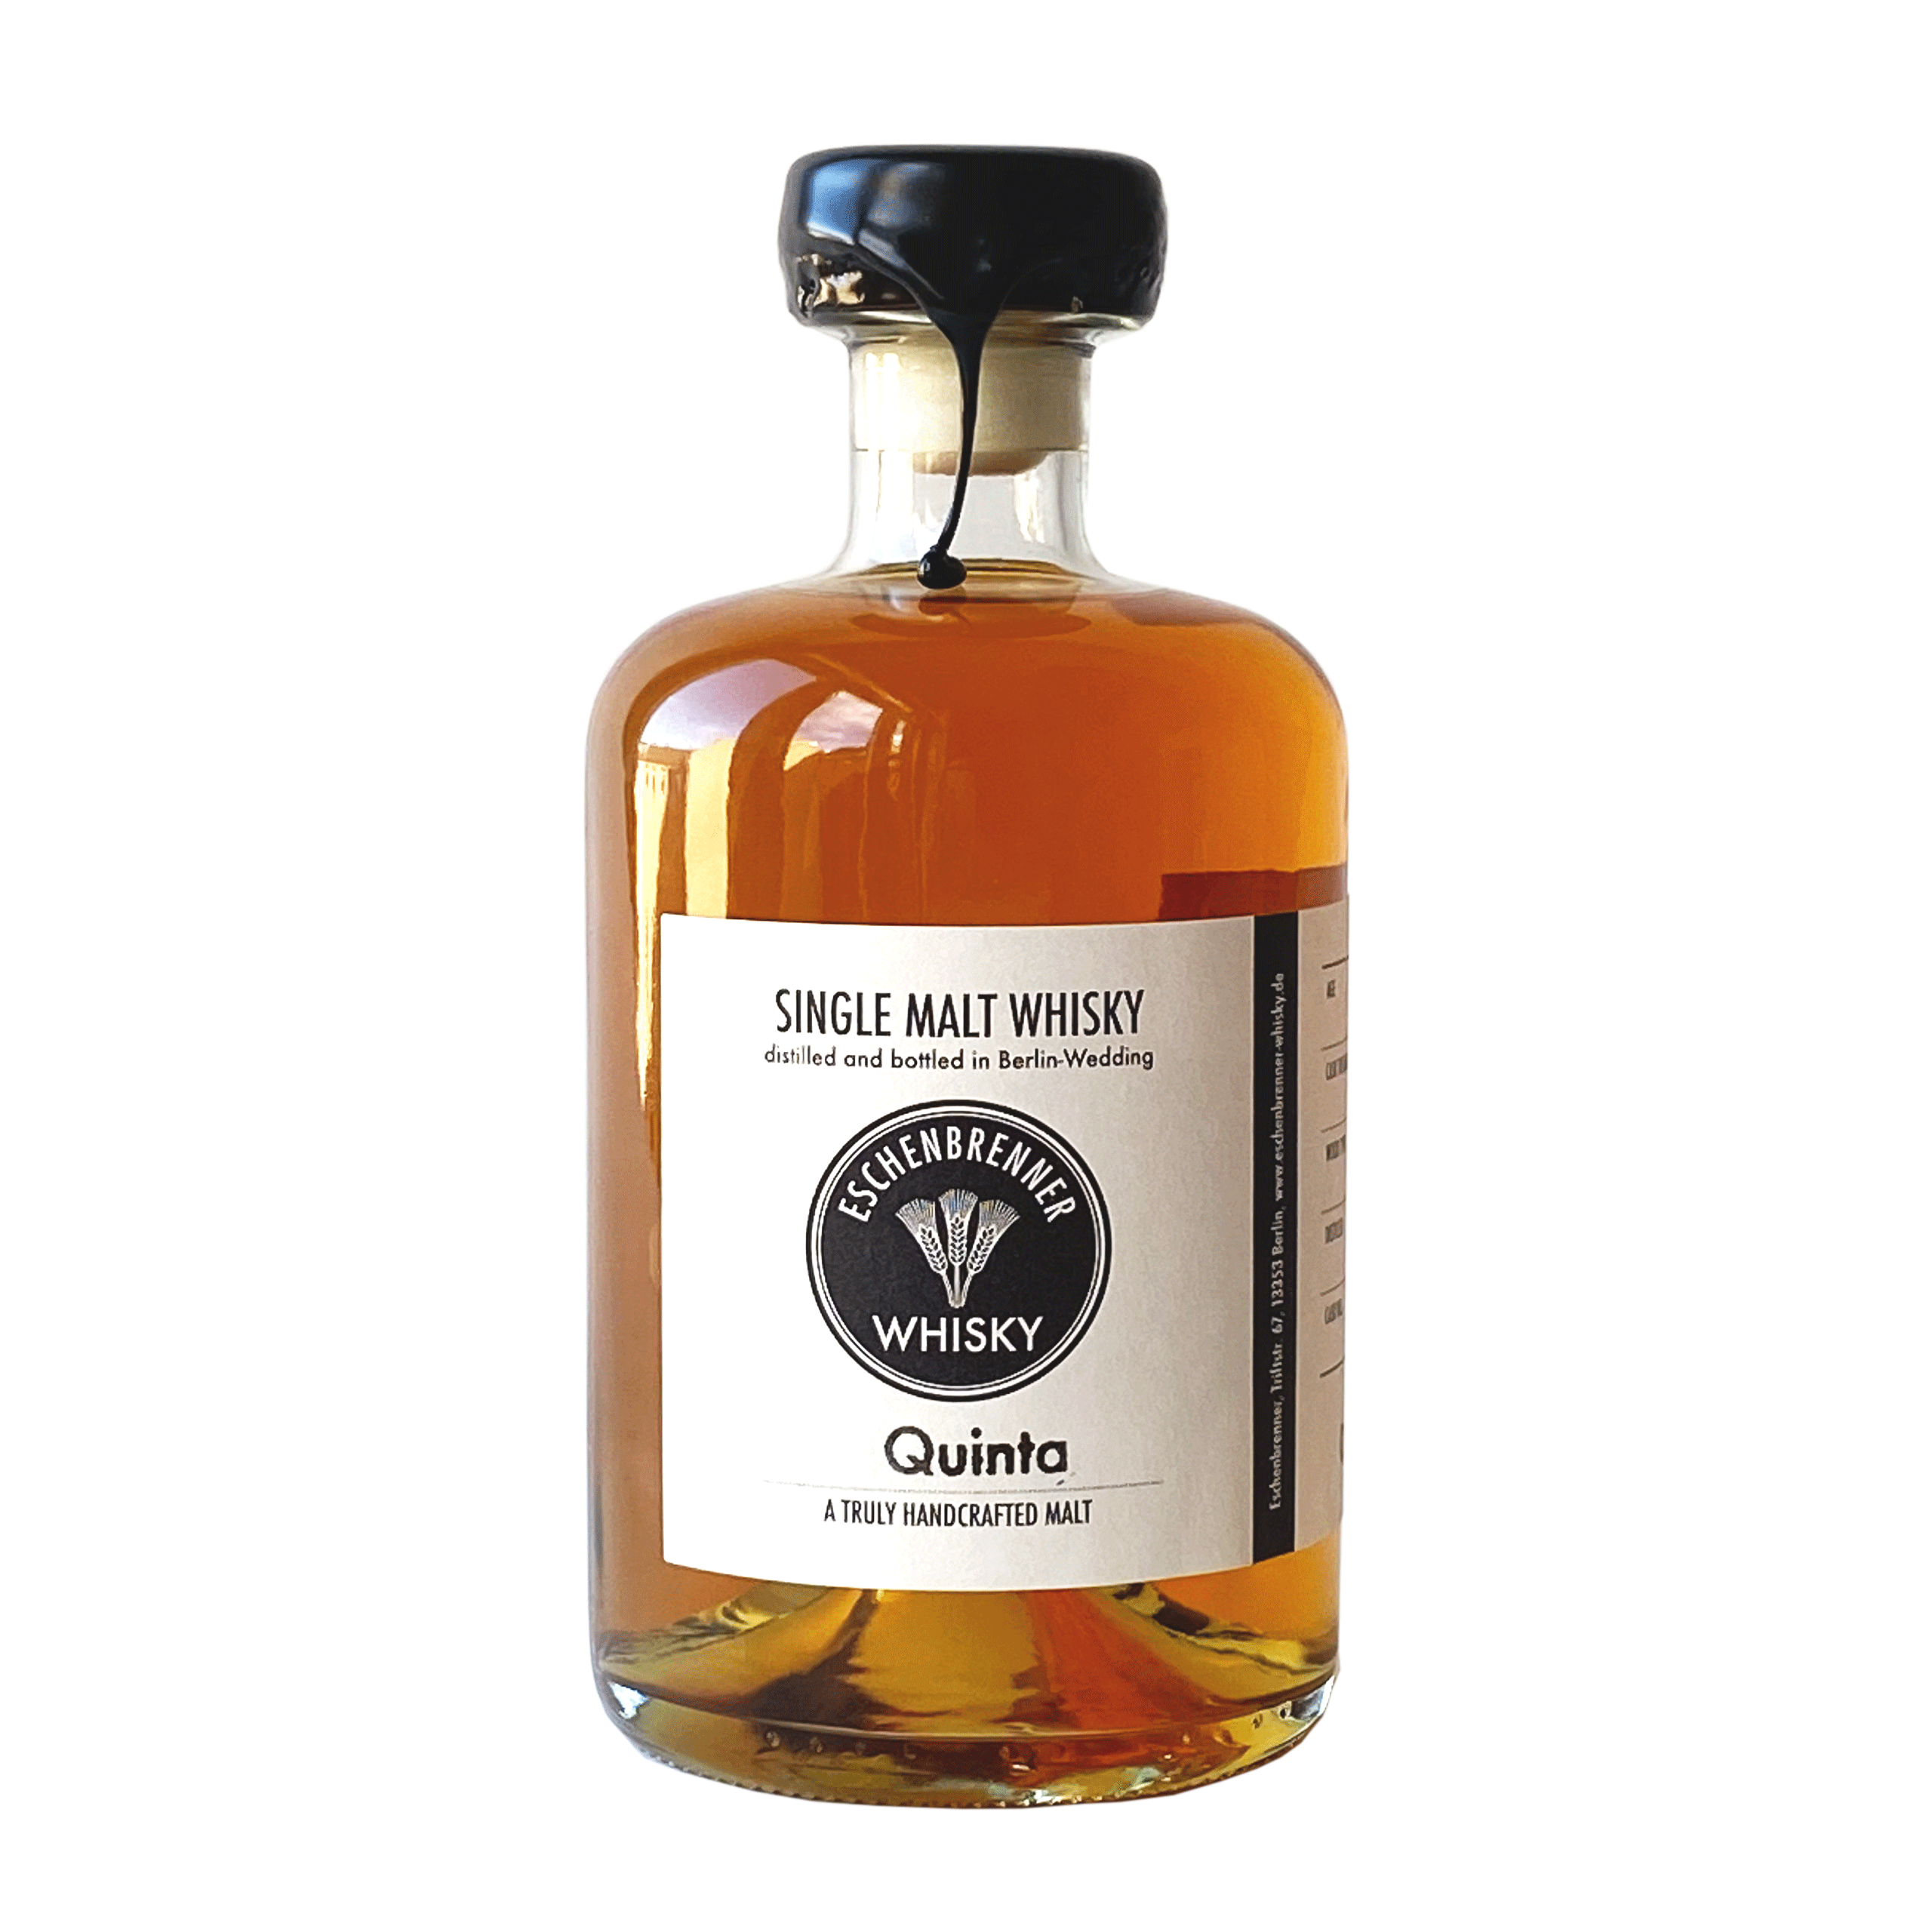 Single Malt Whisky Eschenbrenner Quinta 0,5l